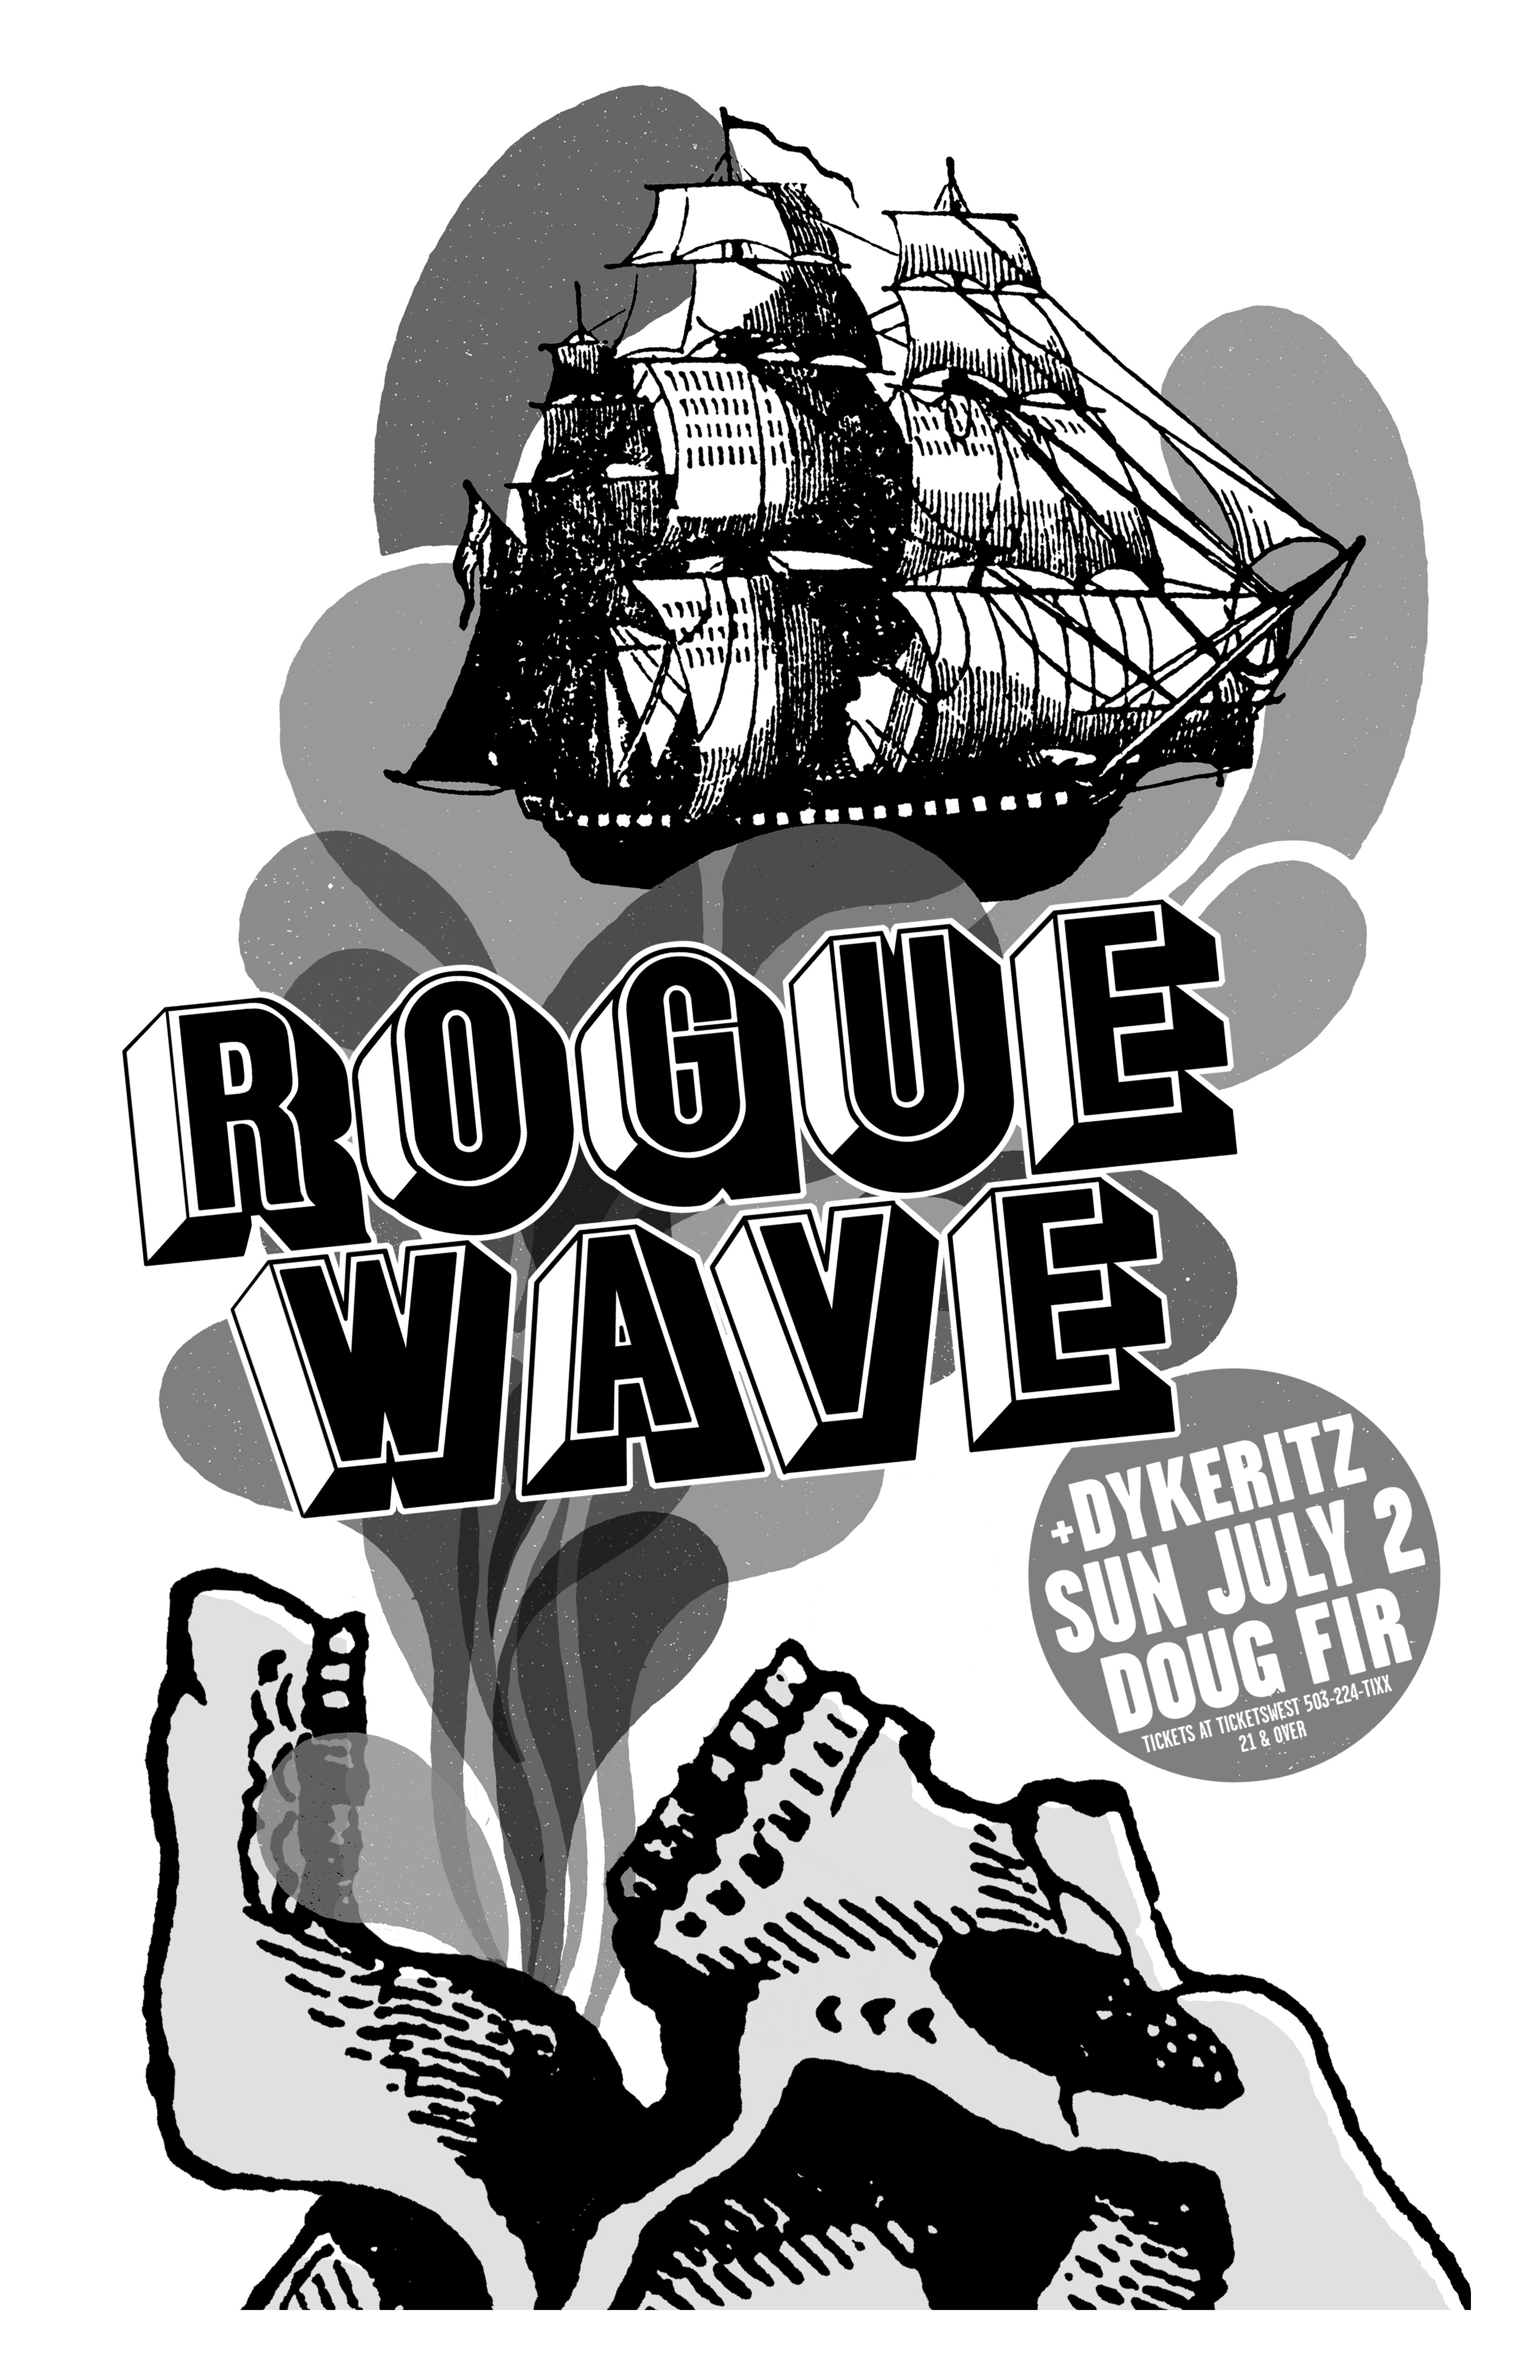 MXP-141.15 Rogue Wave 2006 Doug Fir  Jul 2 Concert Poster